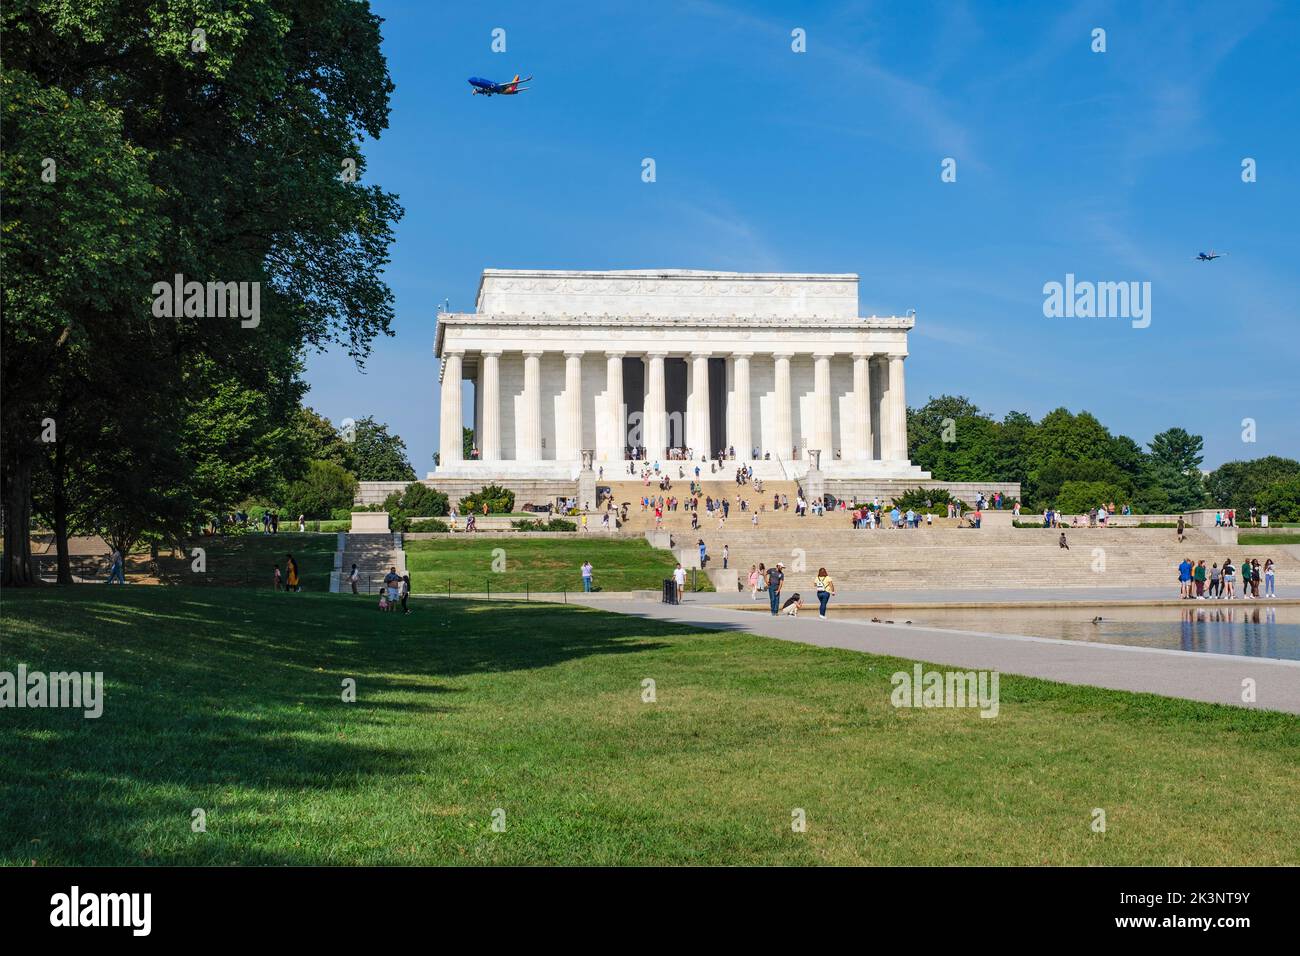 Lincoln Memorial, Washington, DC, EE.UU. Avión que se aproxima al Aeropuerto Nacional Reagan. Exposición múltiple. Foto de stock